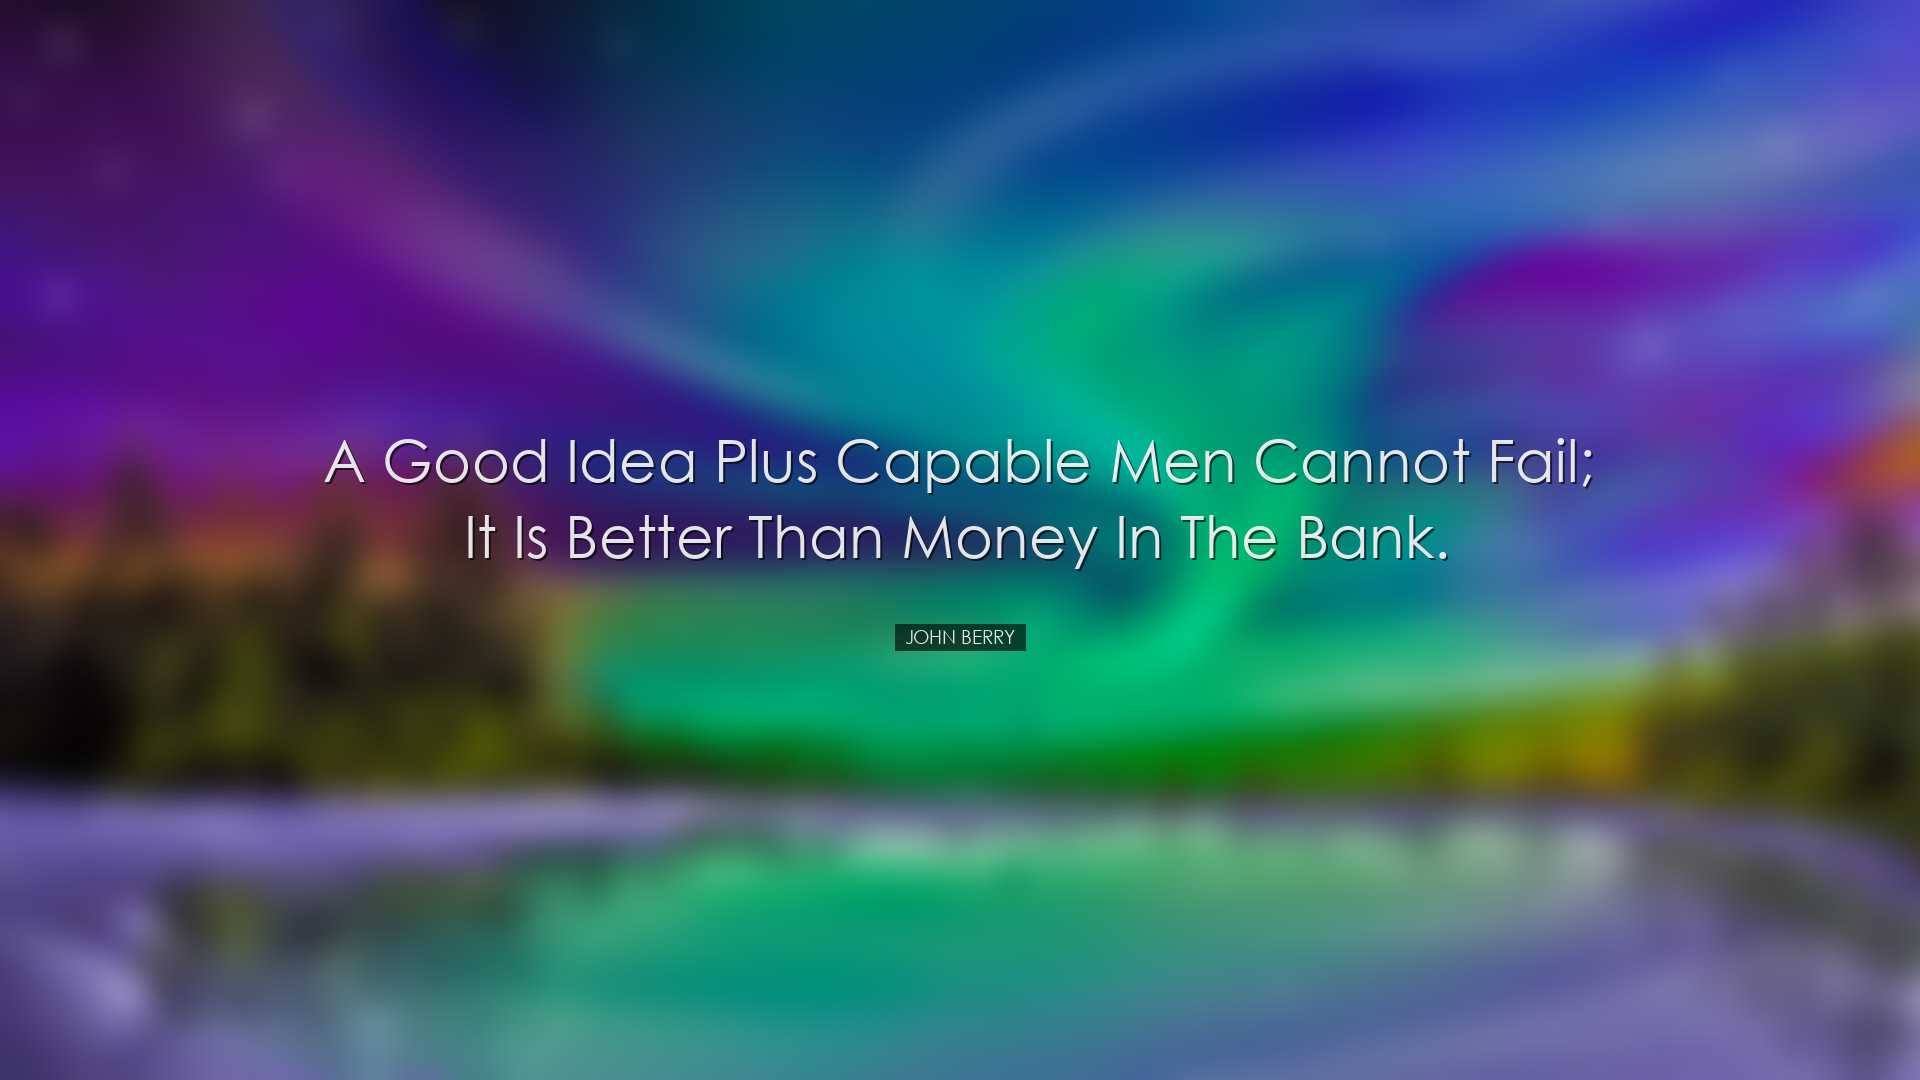 A good idea plus capable men cannot fail; it is better than money